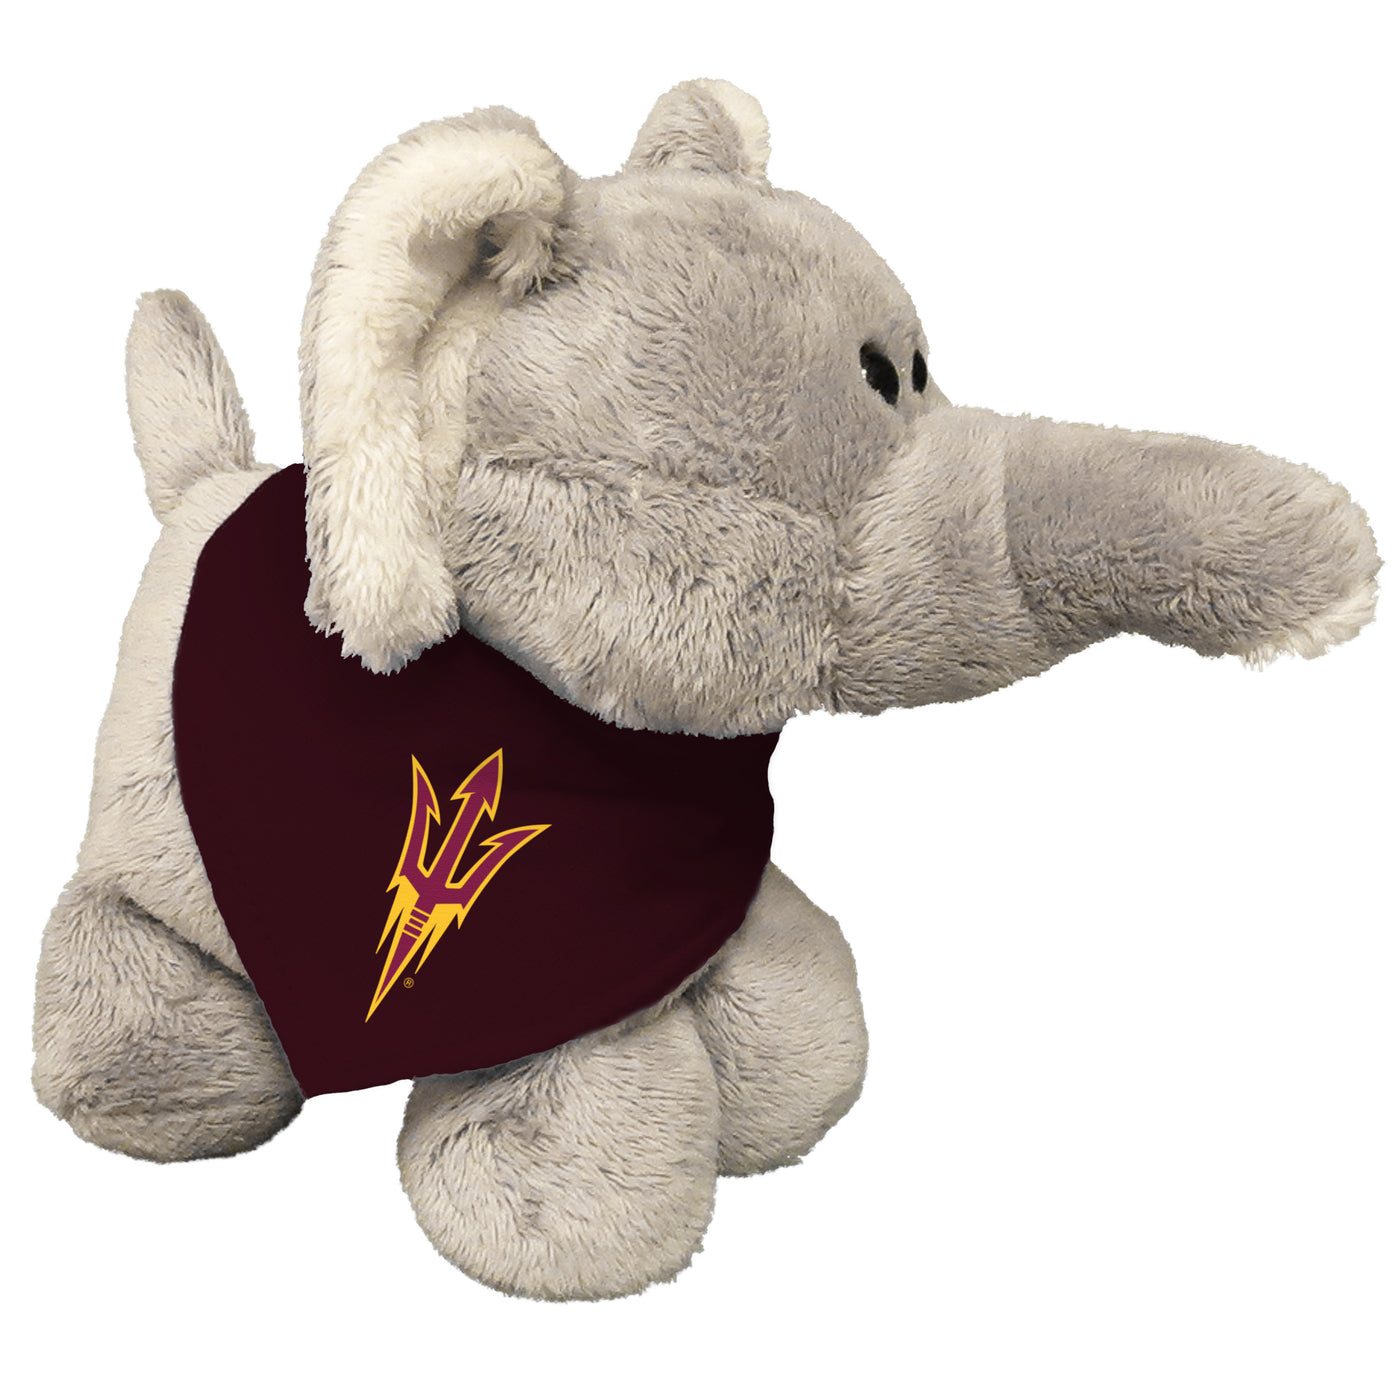 ASU Stuffed grey elephant wearing a maroon bandanna around its neck featuring the pitchfork logo.